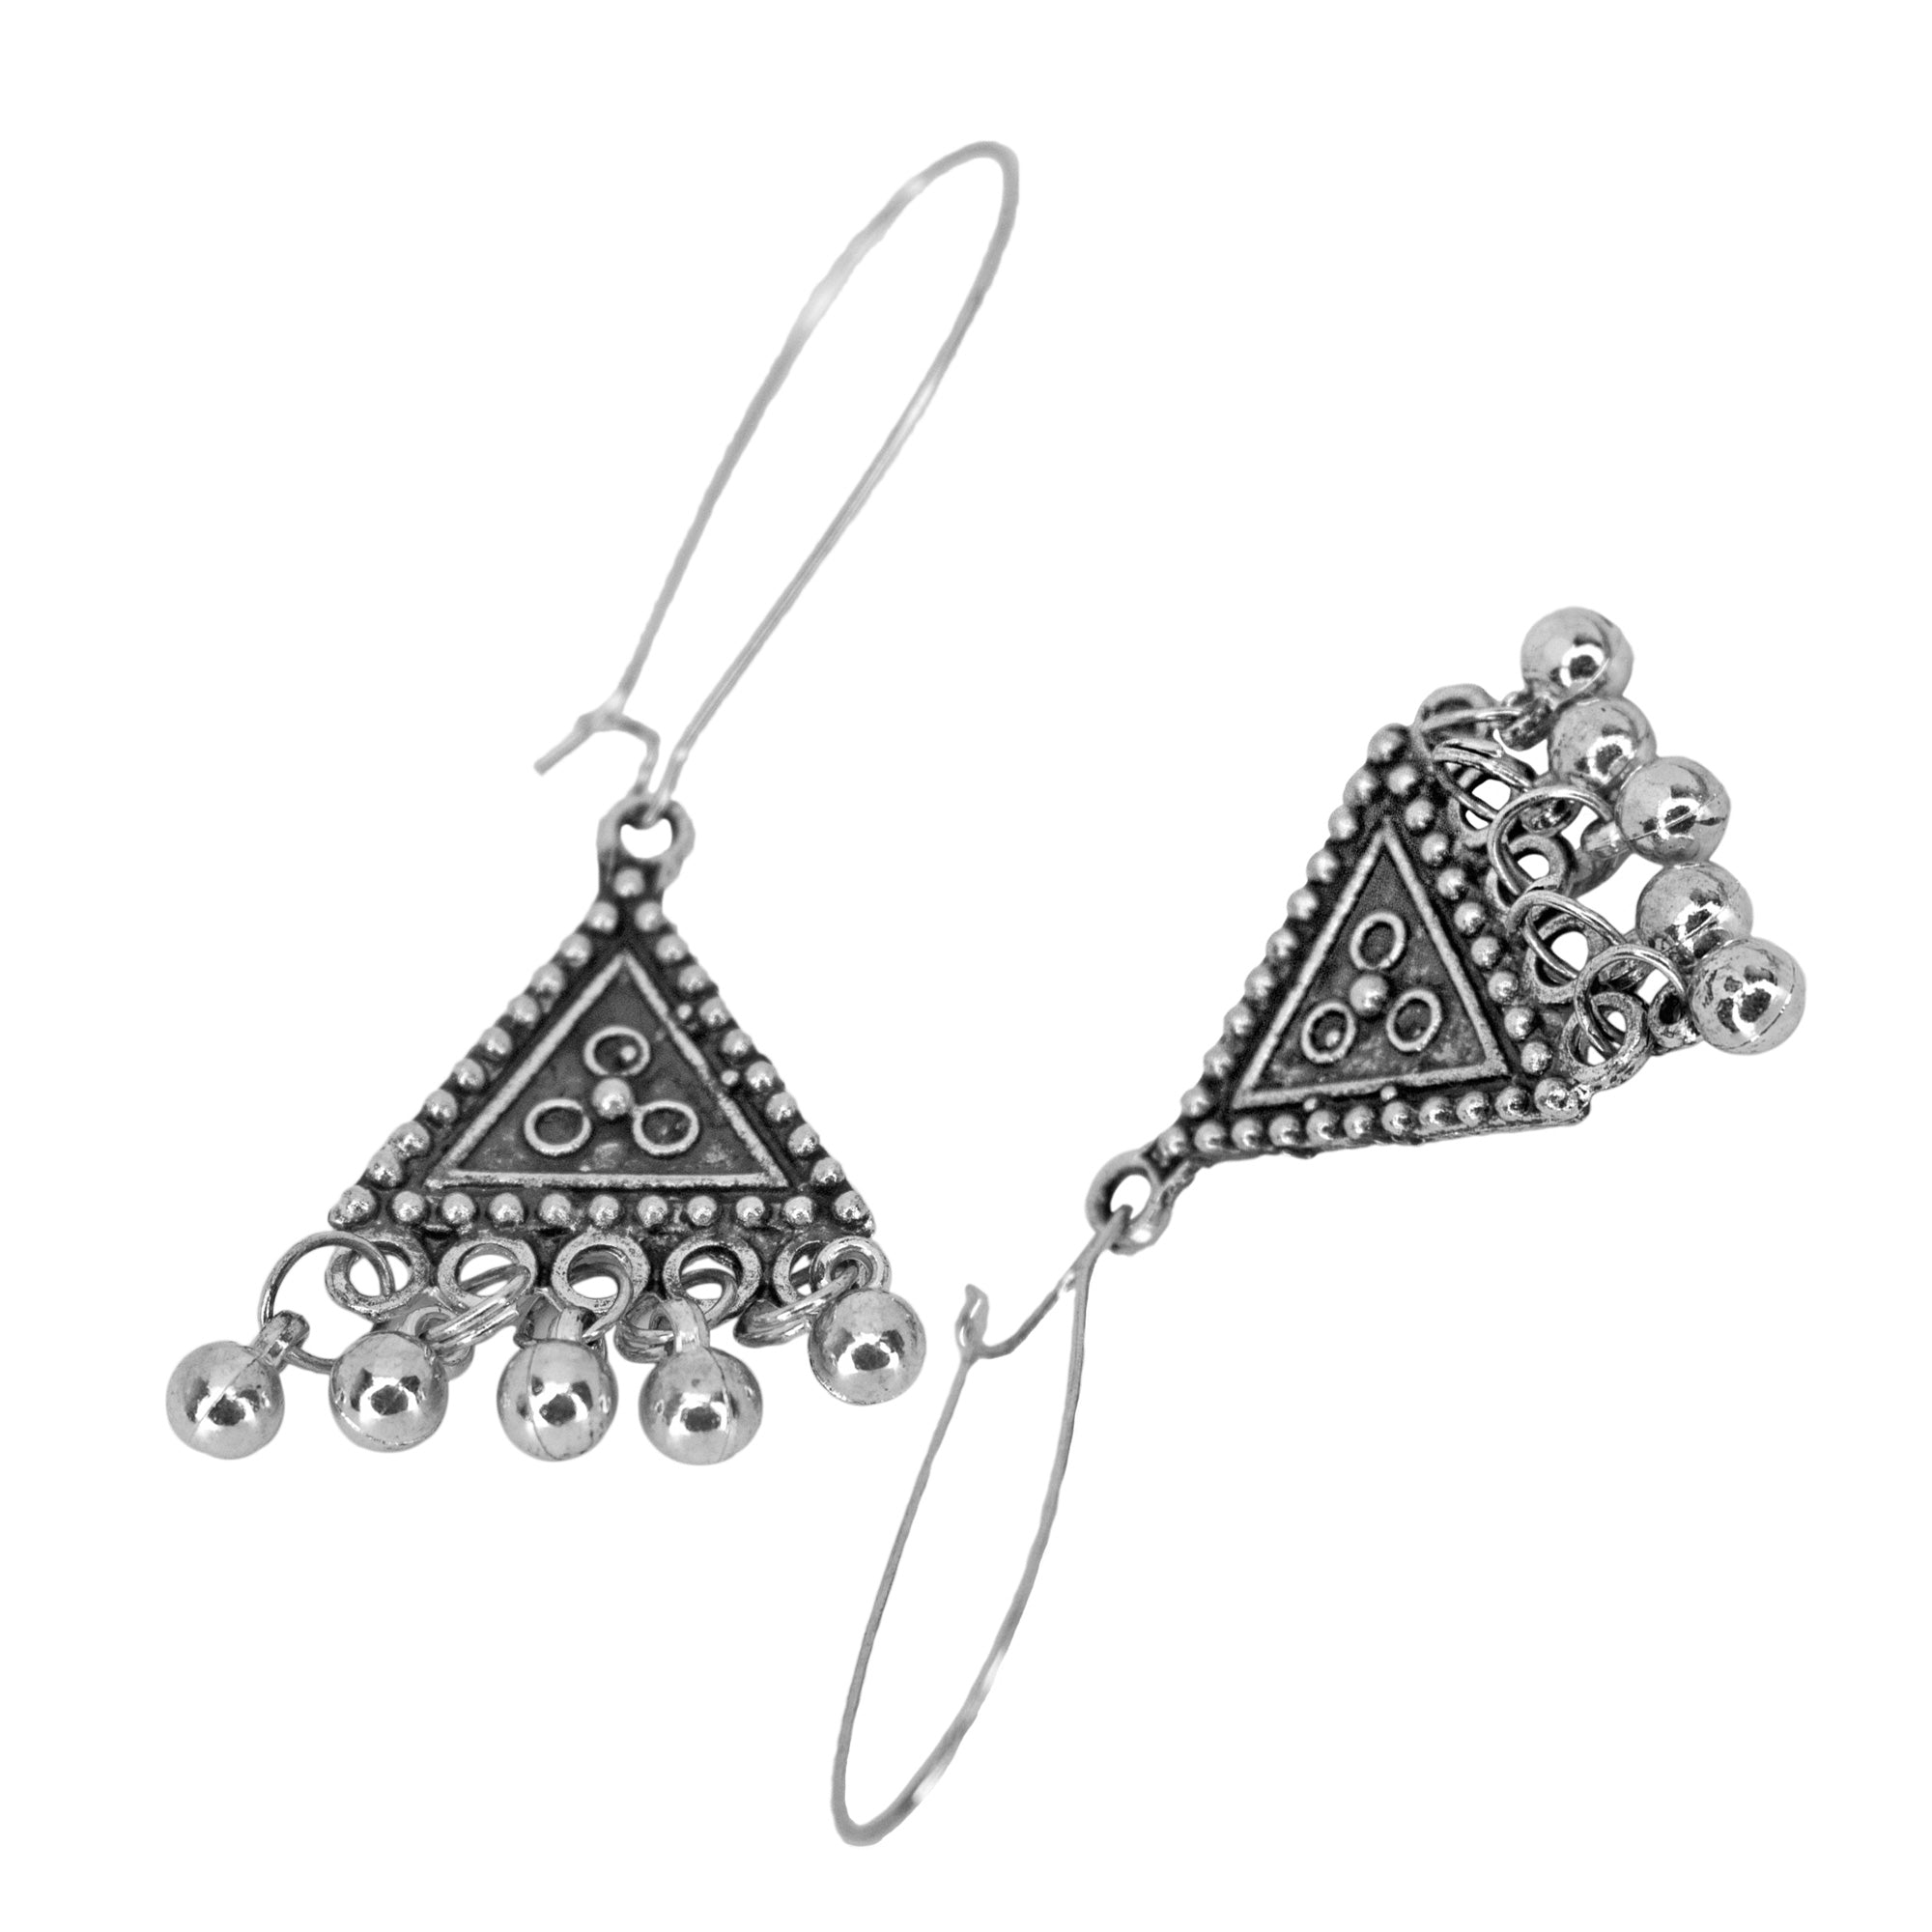 Abhinn Classy Silver Plated Geometrical Shape Hoops Earrings For Women